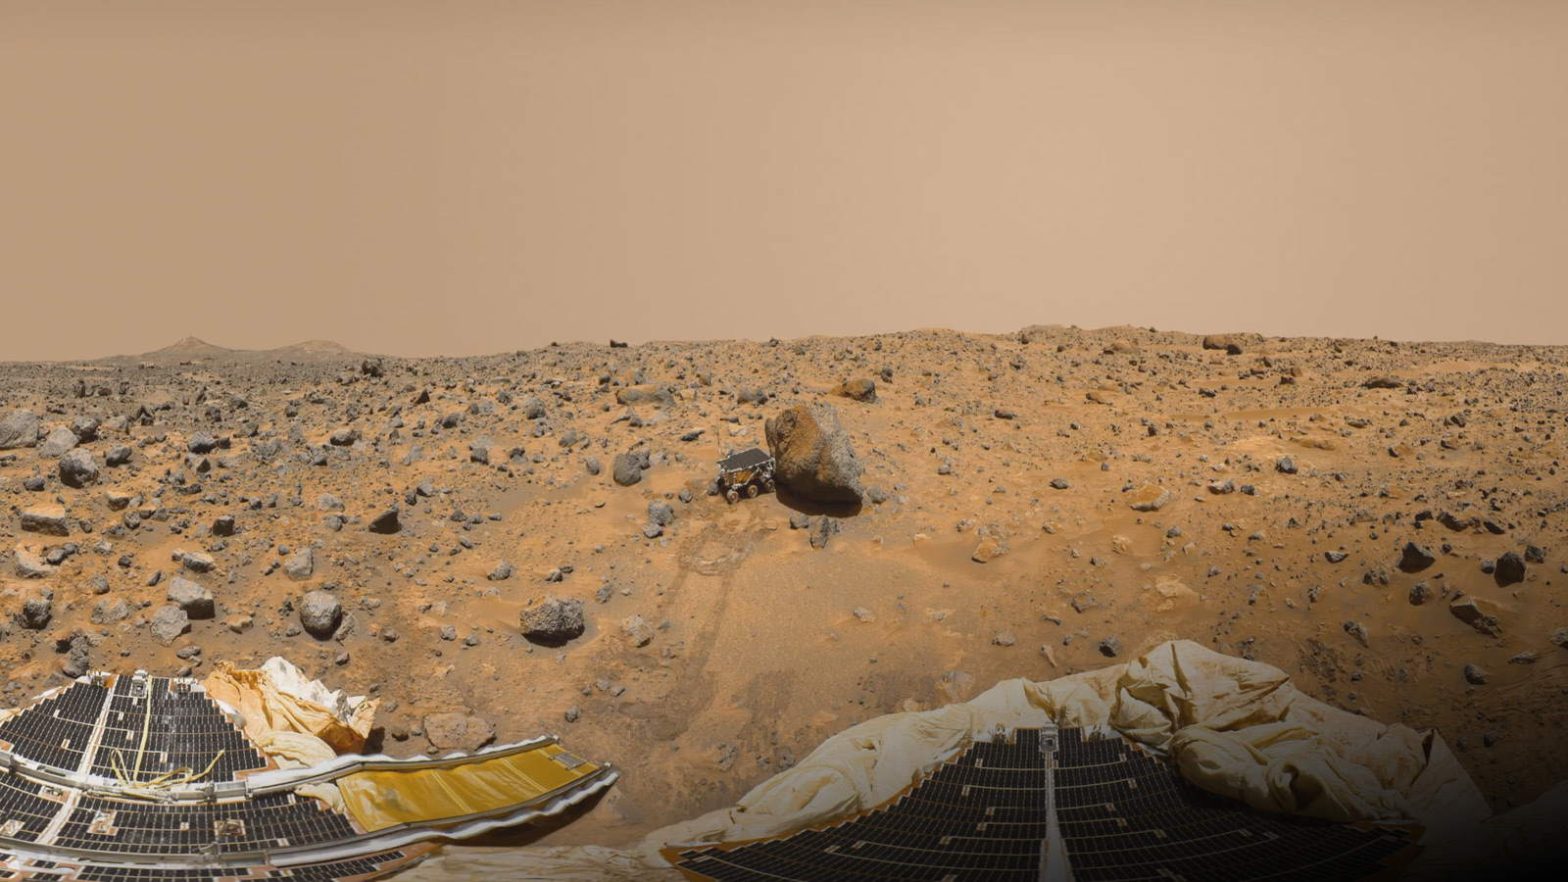 Mars Pathfinder Lander and the Sojourner Rover on Mars